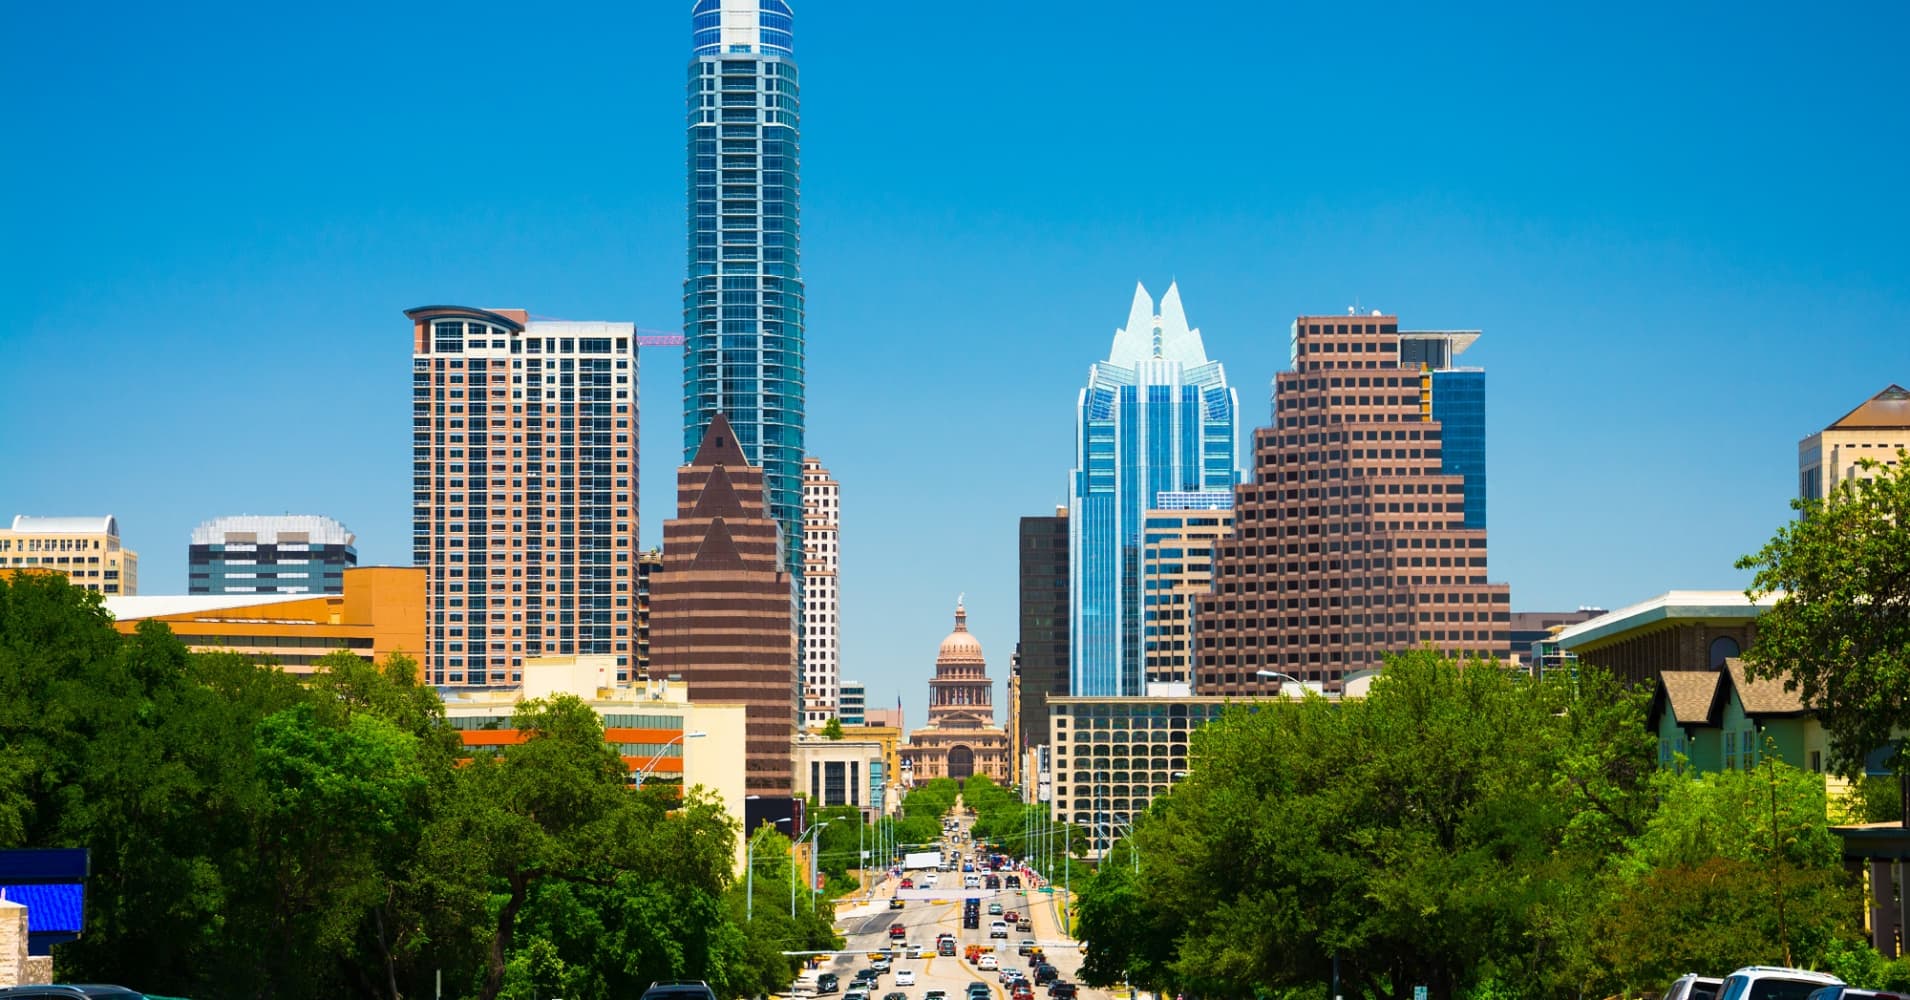 Tech executives earn less in Austin, Texas